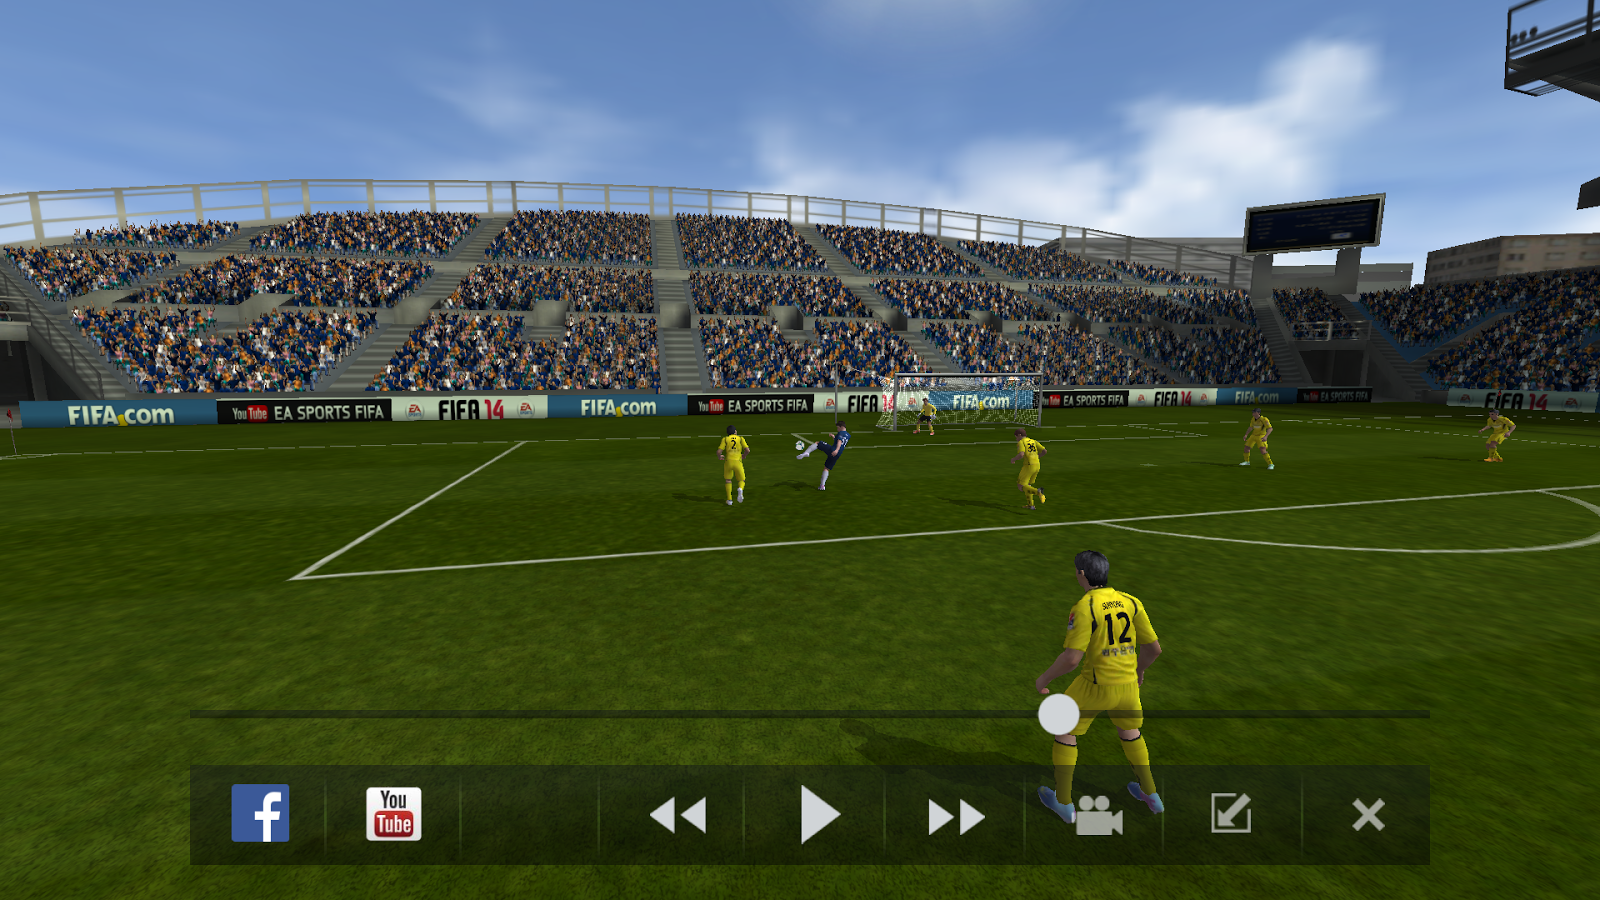 Fifa 14 mods. FIFA 14 Gameplay. ФИФА 14 геймплей ПК. Манджукич ФИФА 14. Aviva Stadium FIFA 14.